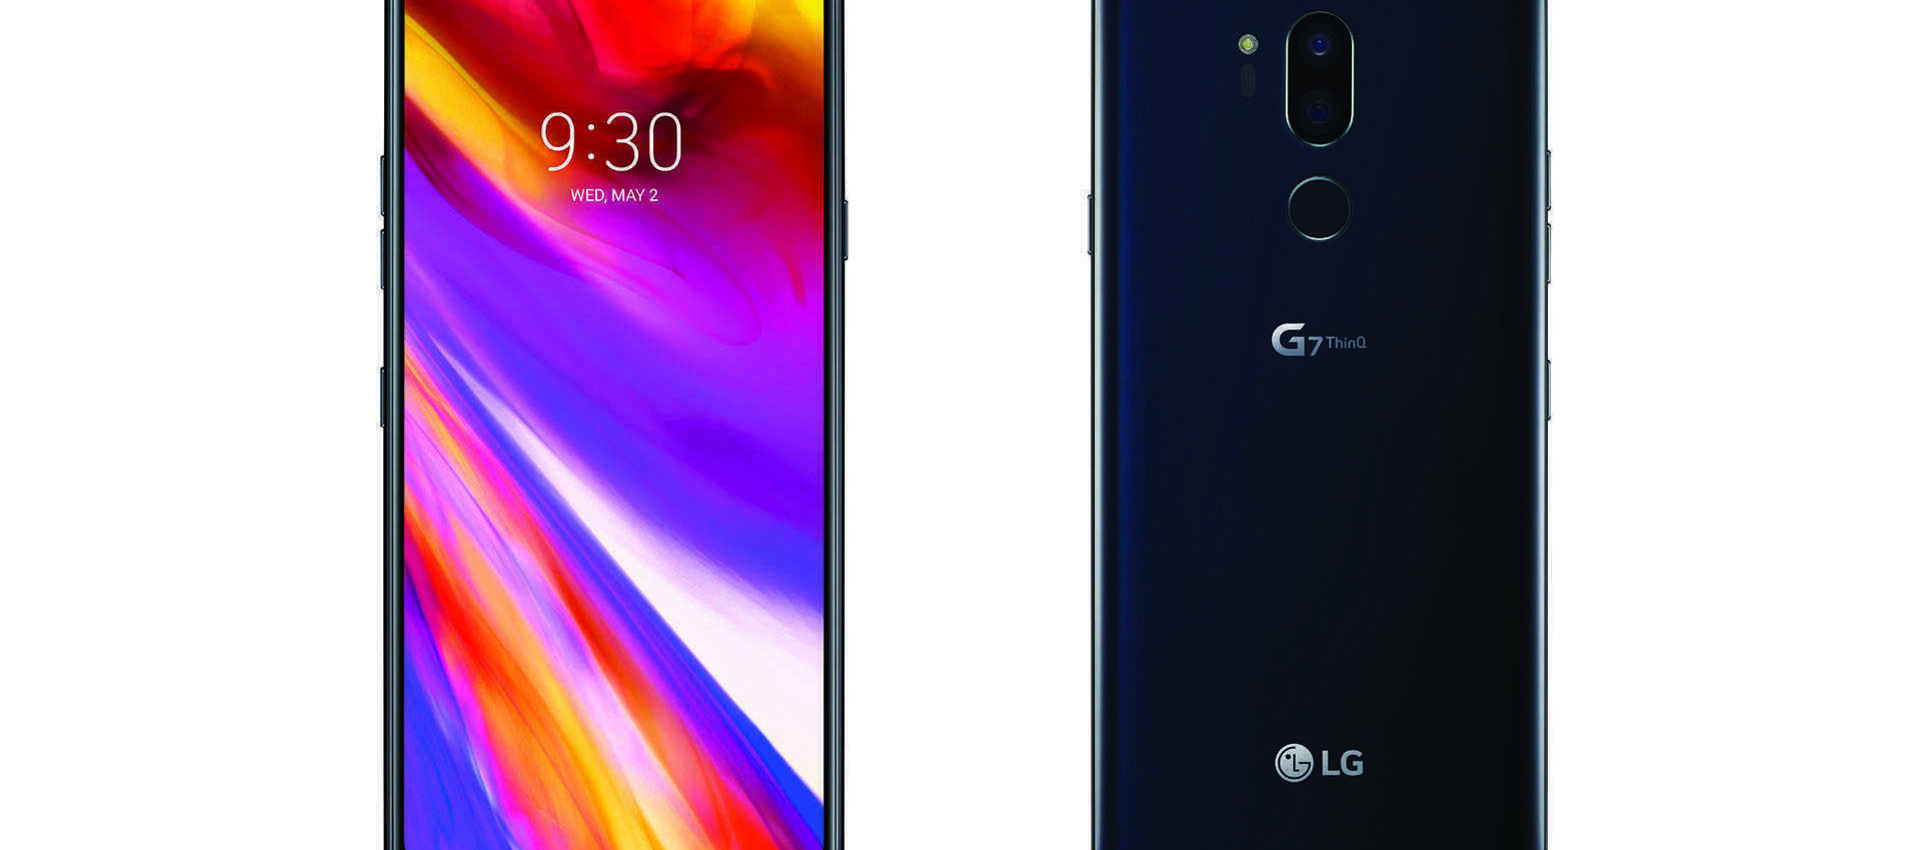 Review: LG G7 ThinQ